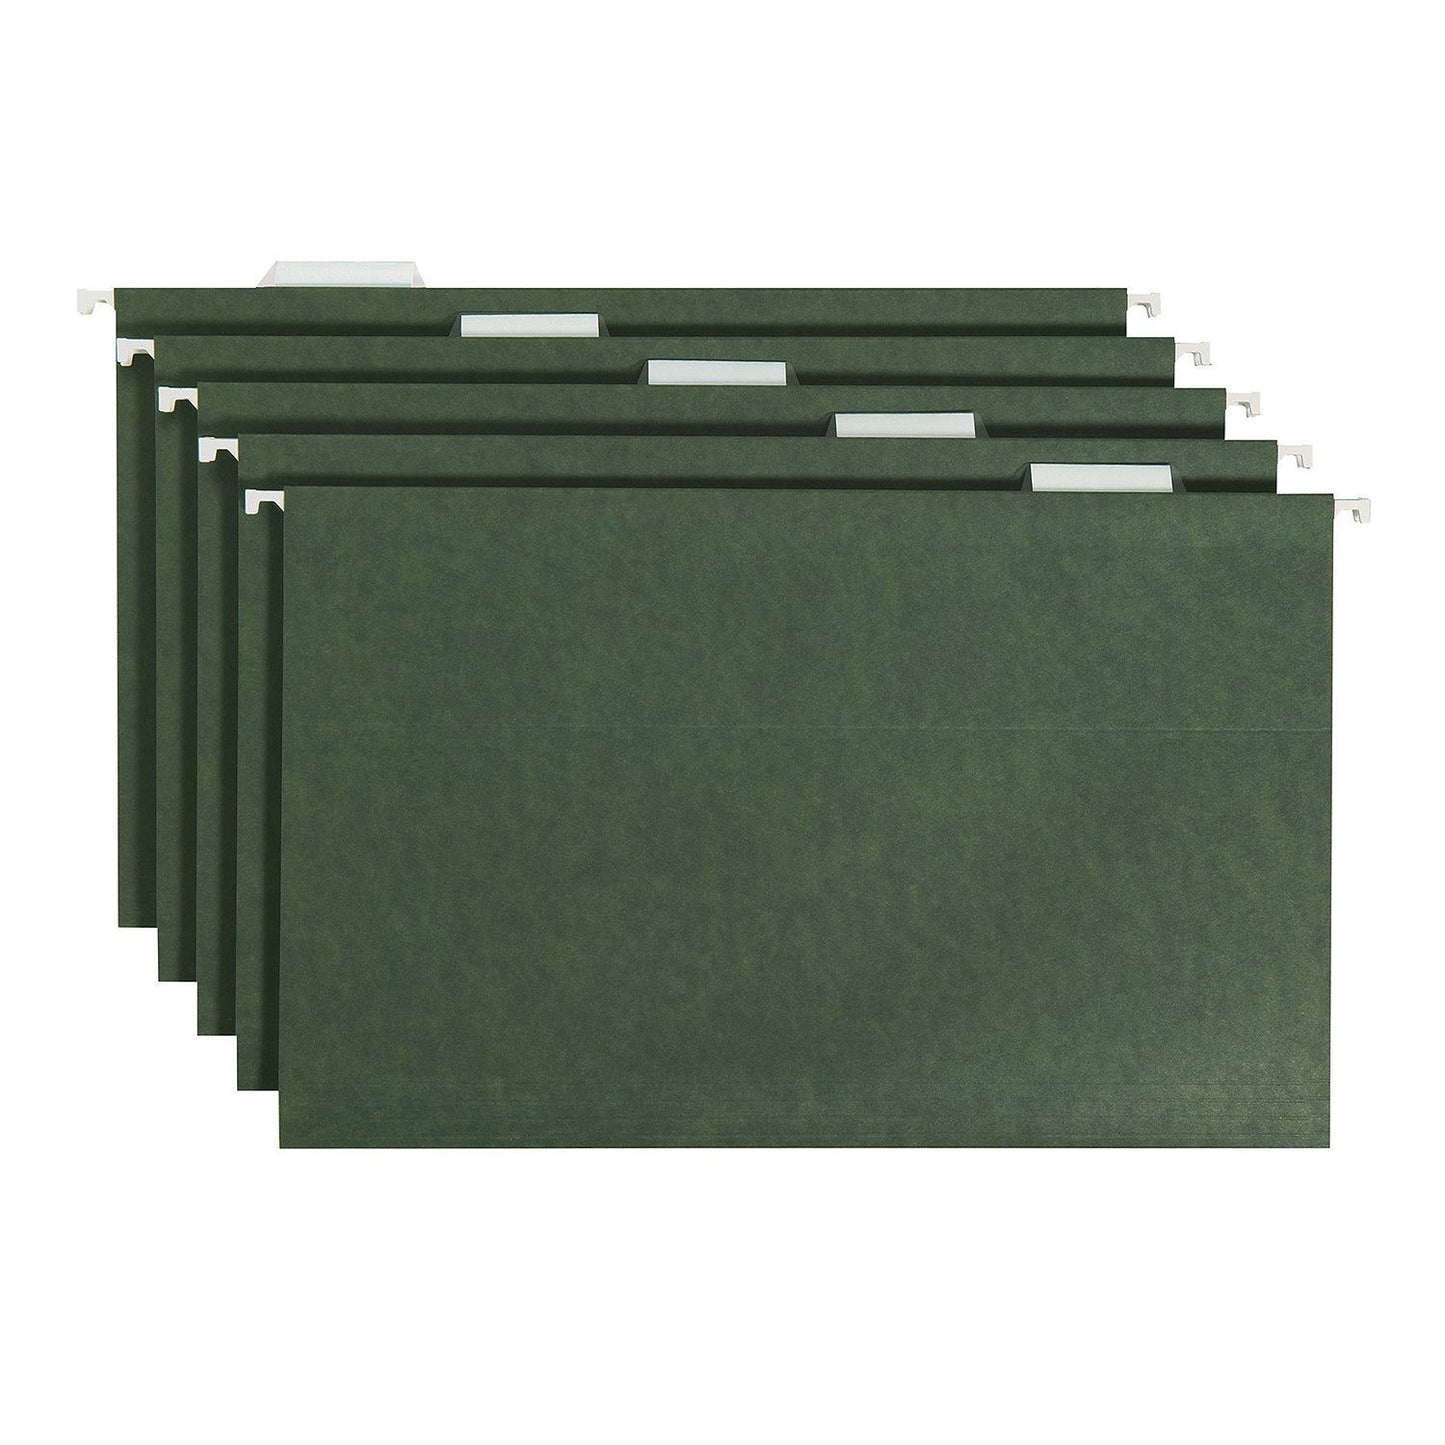 Smead 1/5 Cut Adjustable Positions Hanging File Folders, Legal, Standard Green, 50ct.